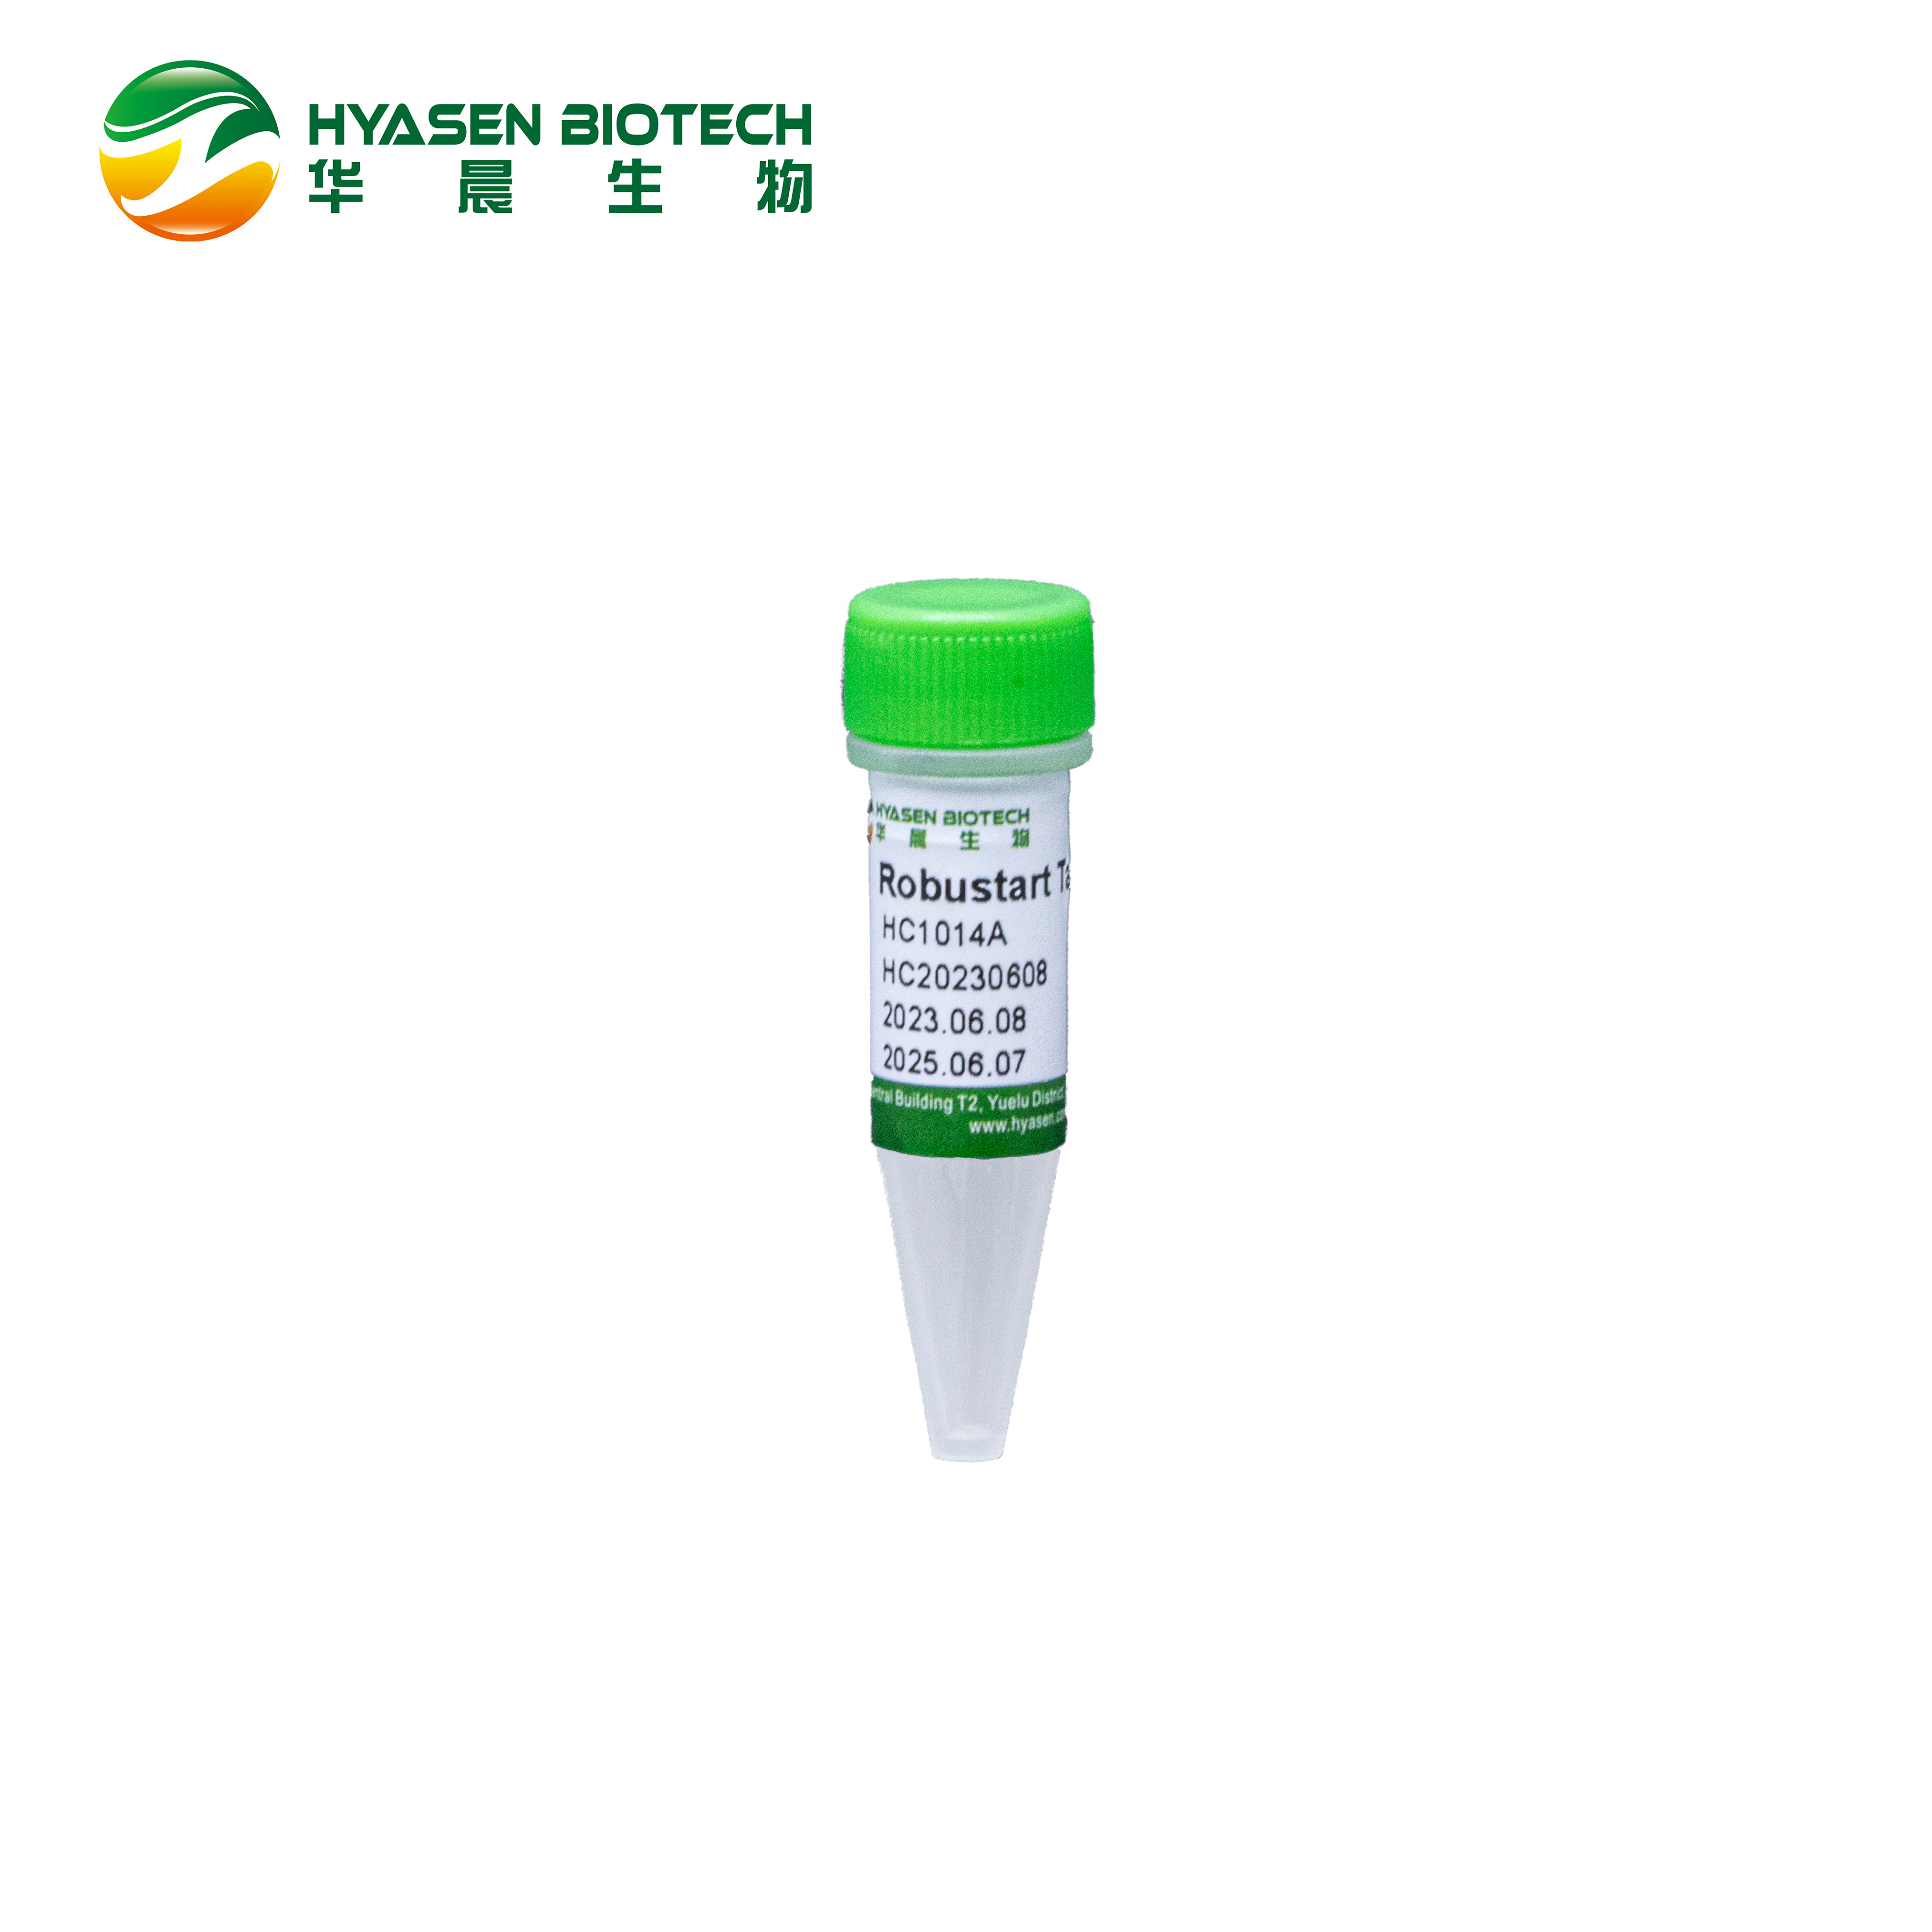 Predstavljena slika Robustart Taq DNA polimeraze HC1014A